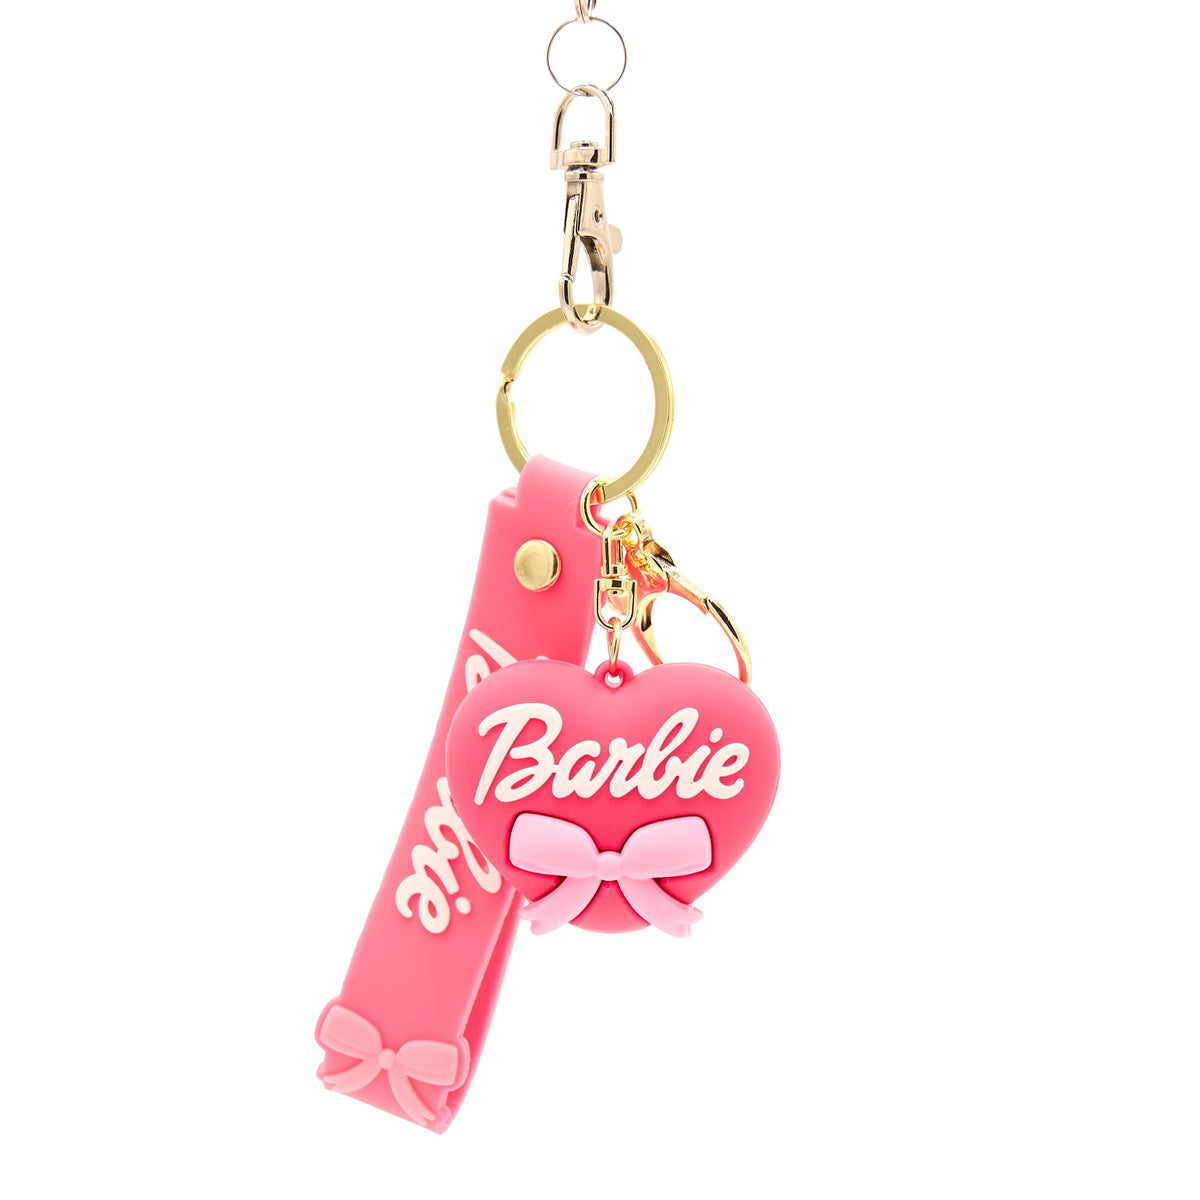 Shenzhen Huiboxin Electronics Co. Ltd Impulse Buying Hot Pink Barbie Heart Keychain, 1 Count 810120712222